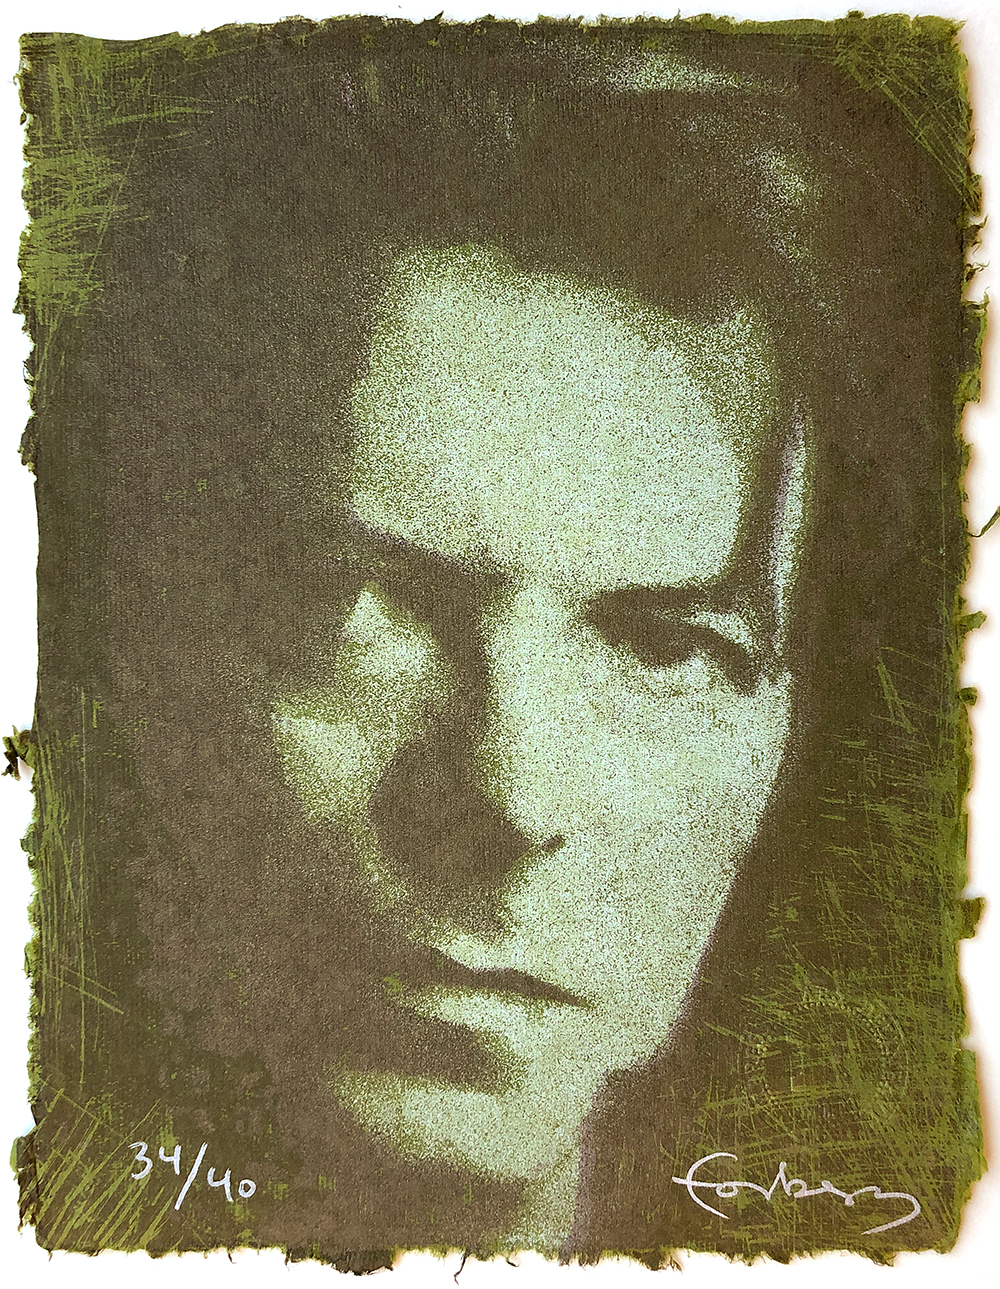 Forberg, Jan Olav - portrett på gulgrønt papir 34/40